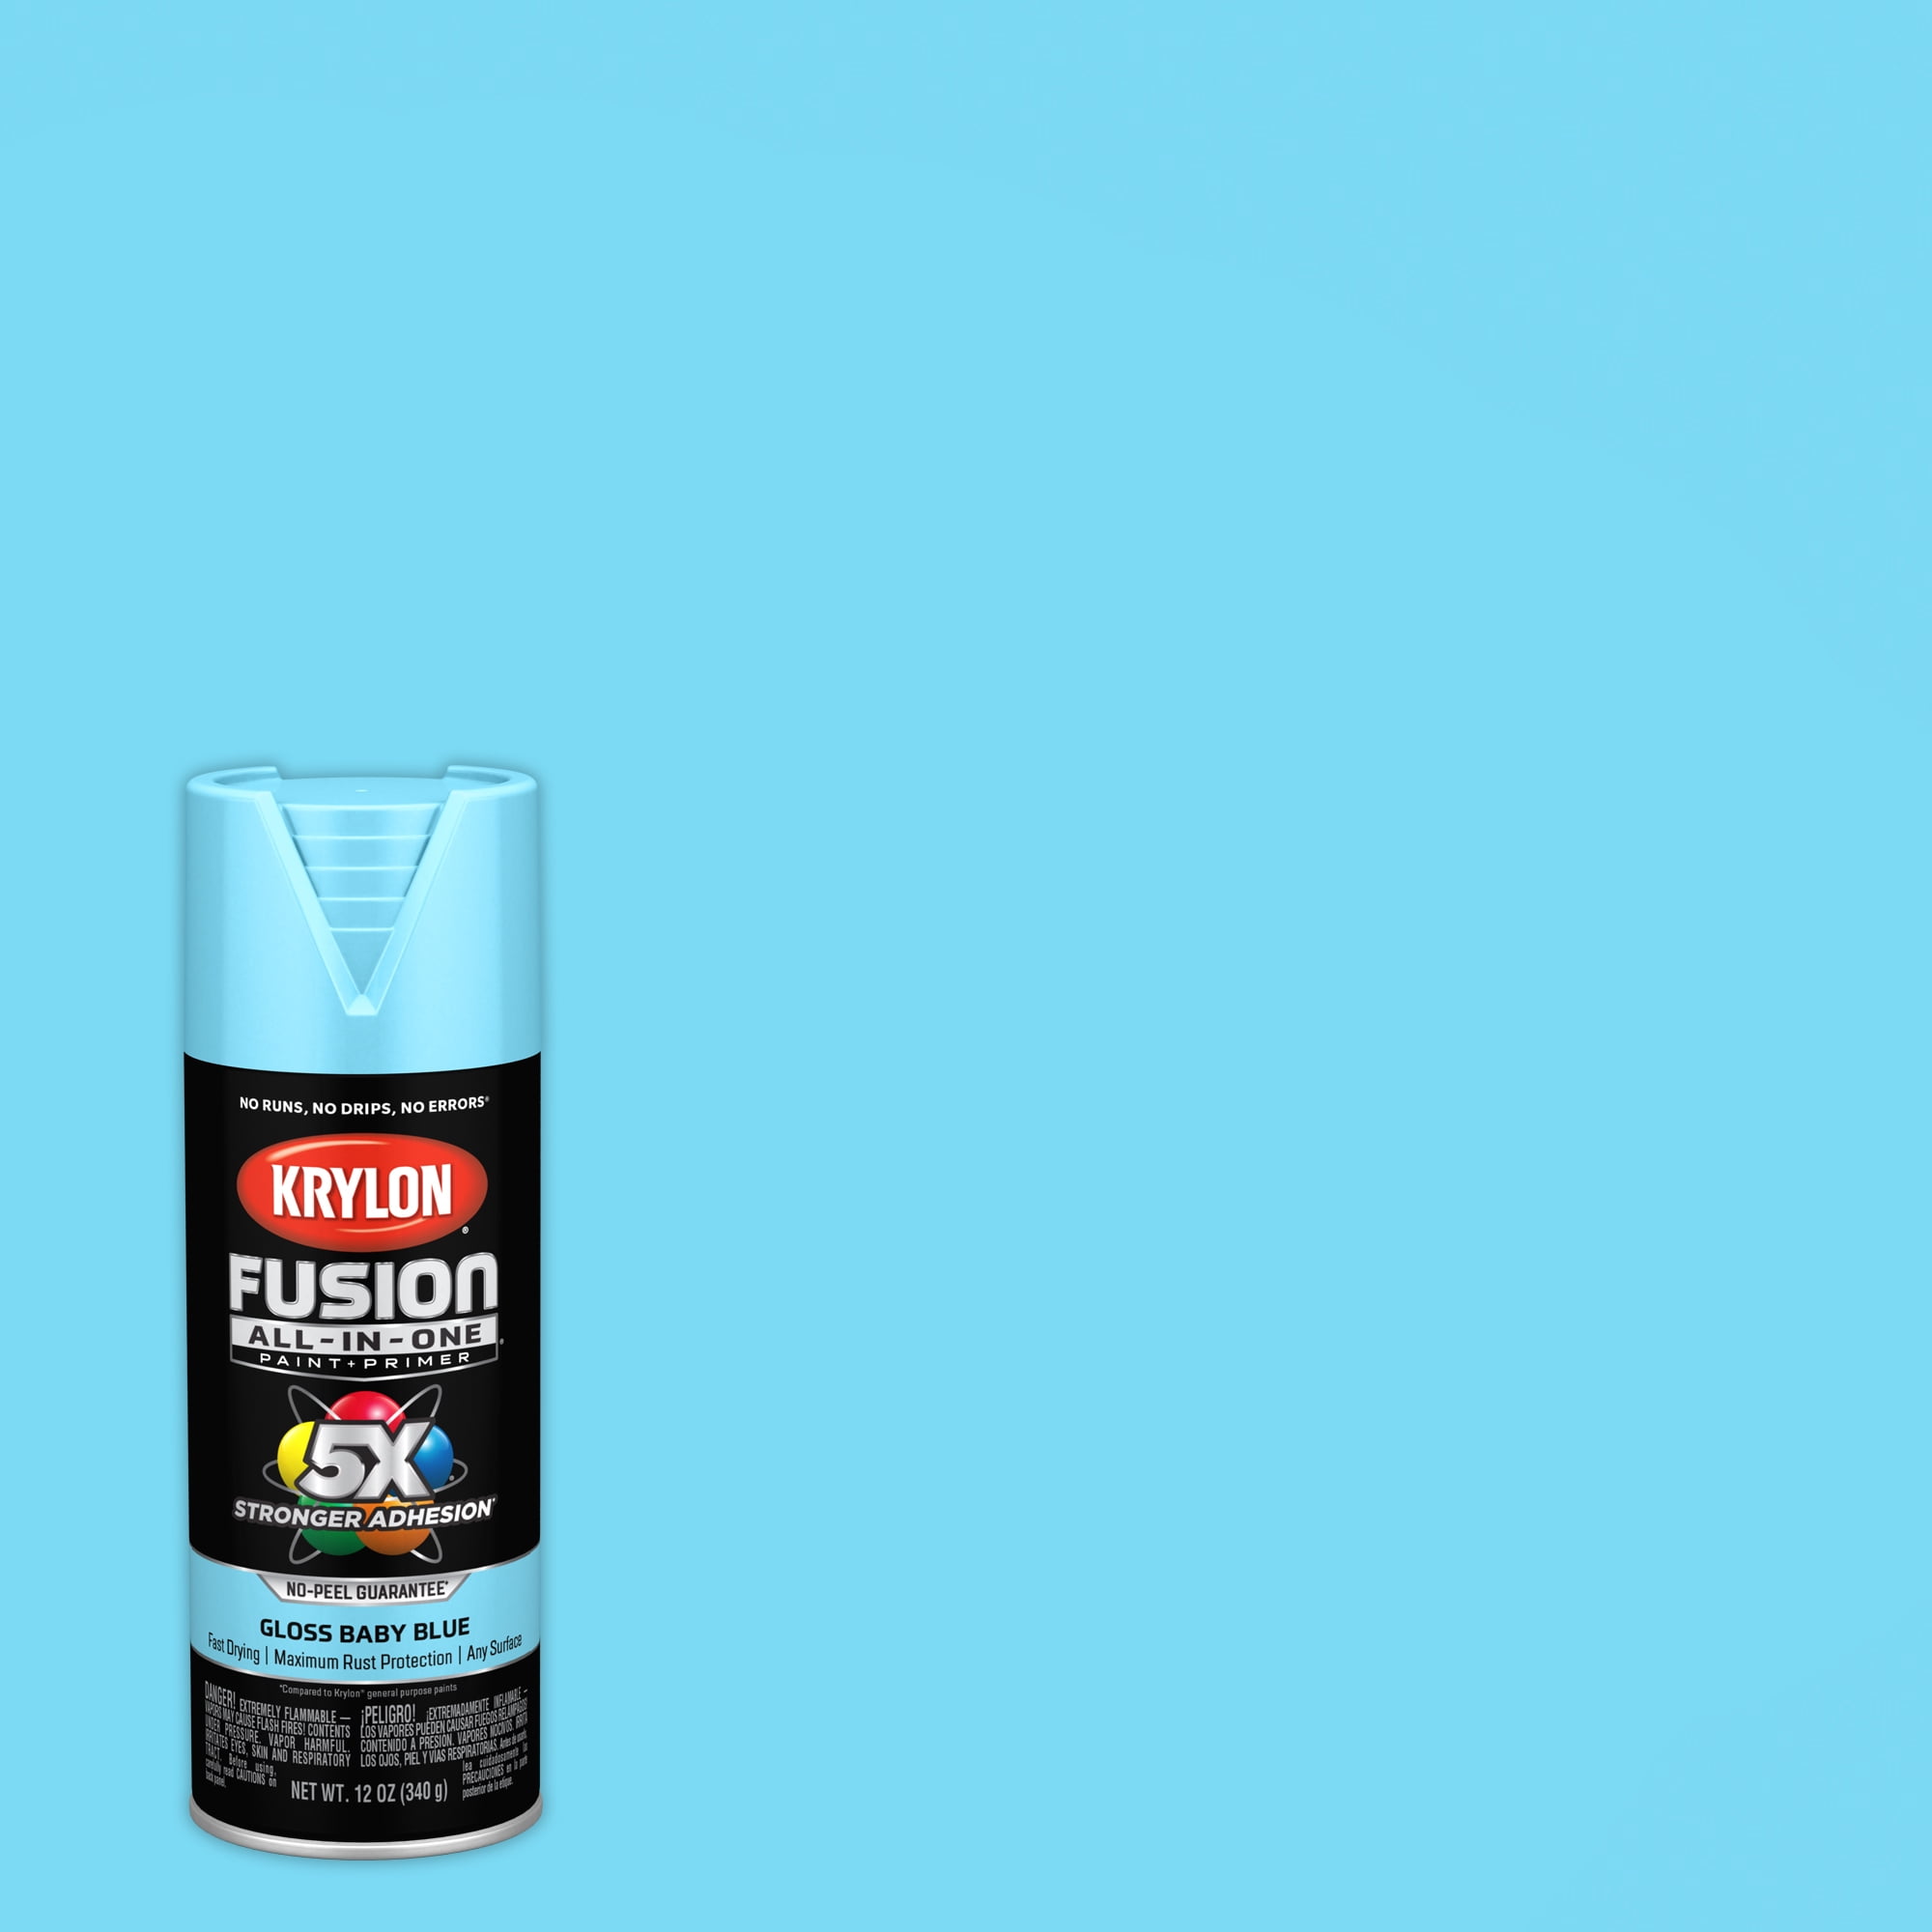 Krylon K02416777 Spray Paint, Gloss, Safety Blue, 12 oz